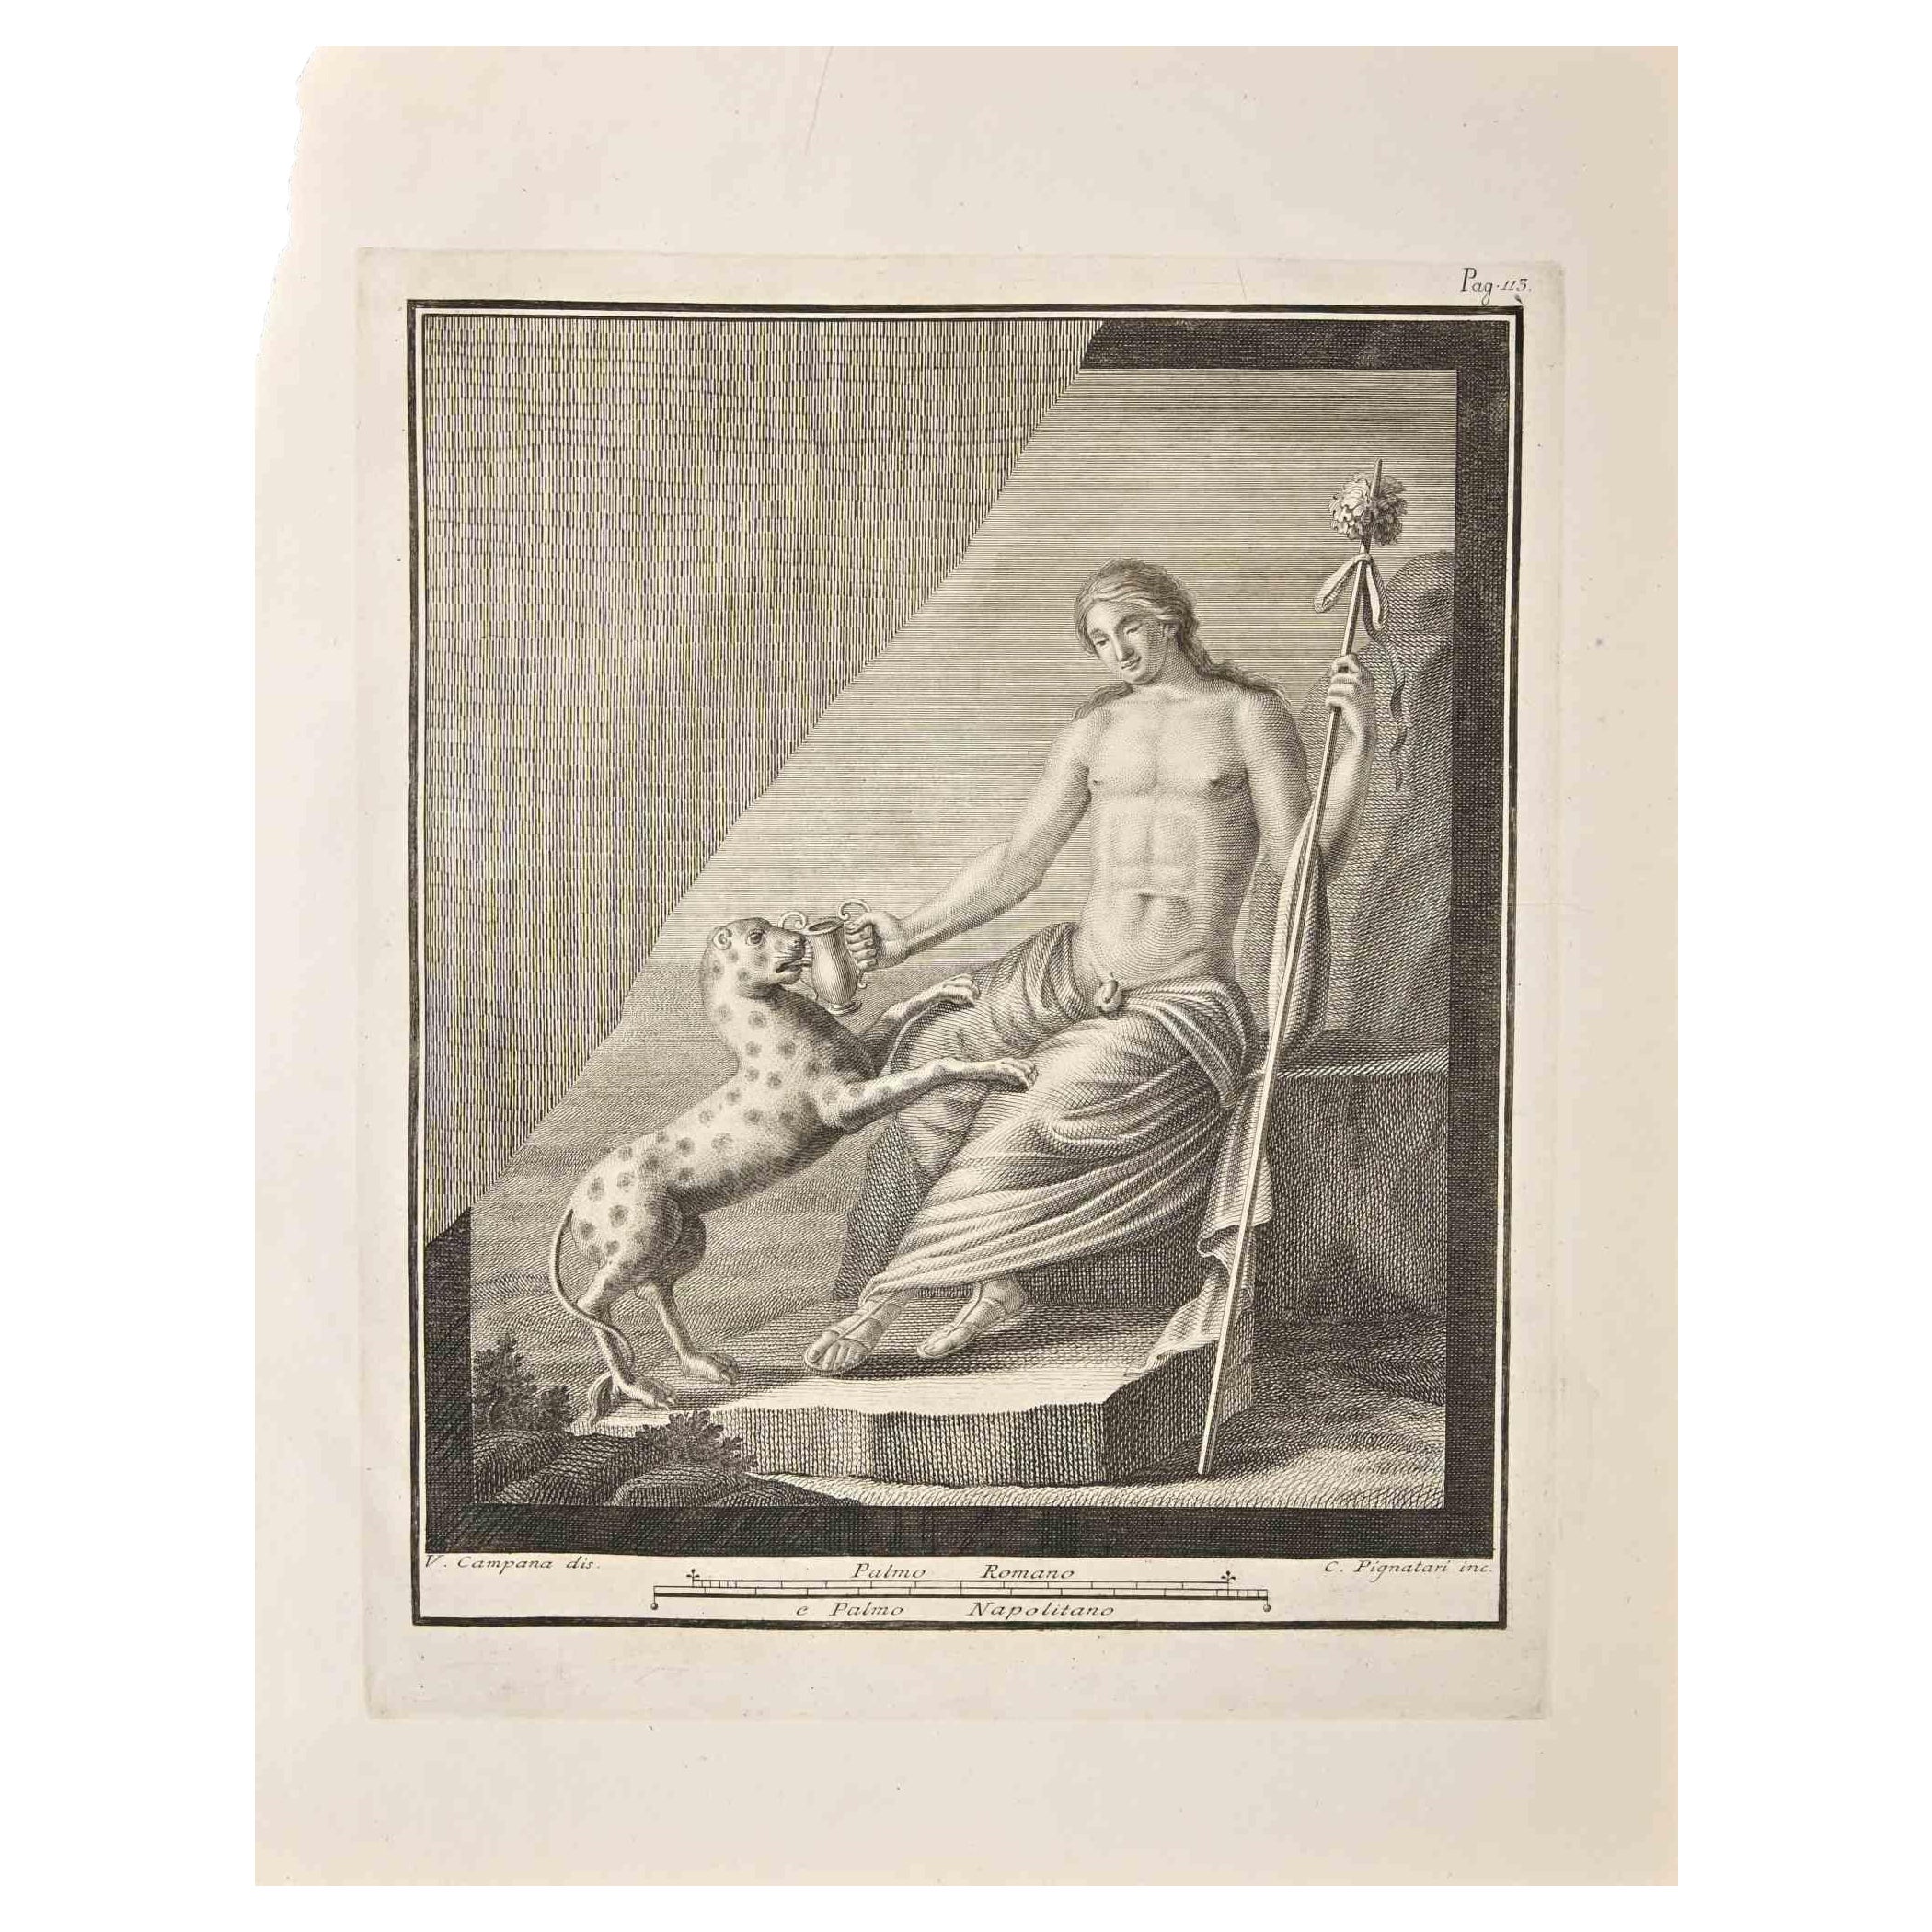 Vincenzo Campana Figurative Print - Ancient Roman Fresco Herculaneum - Etching V. Campana - 18th Century